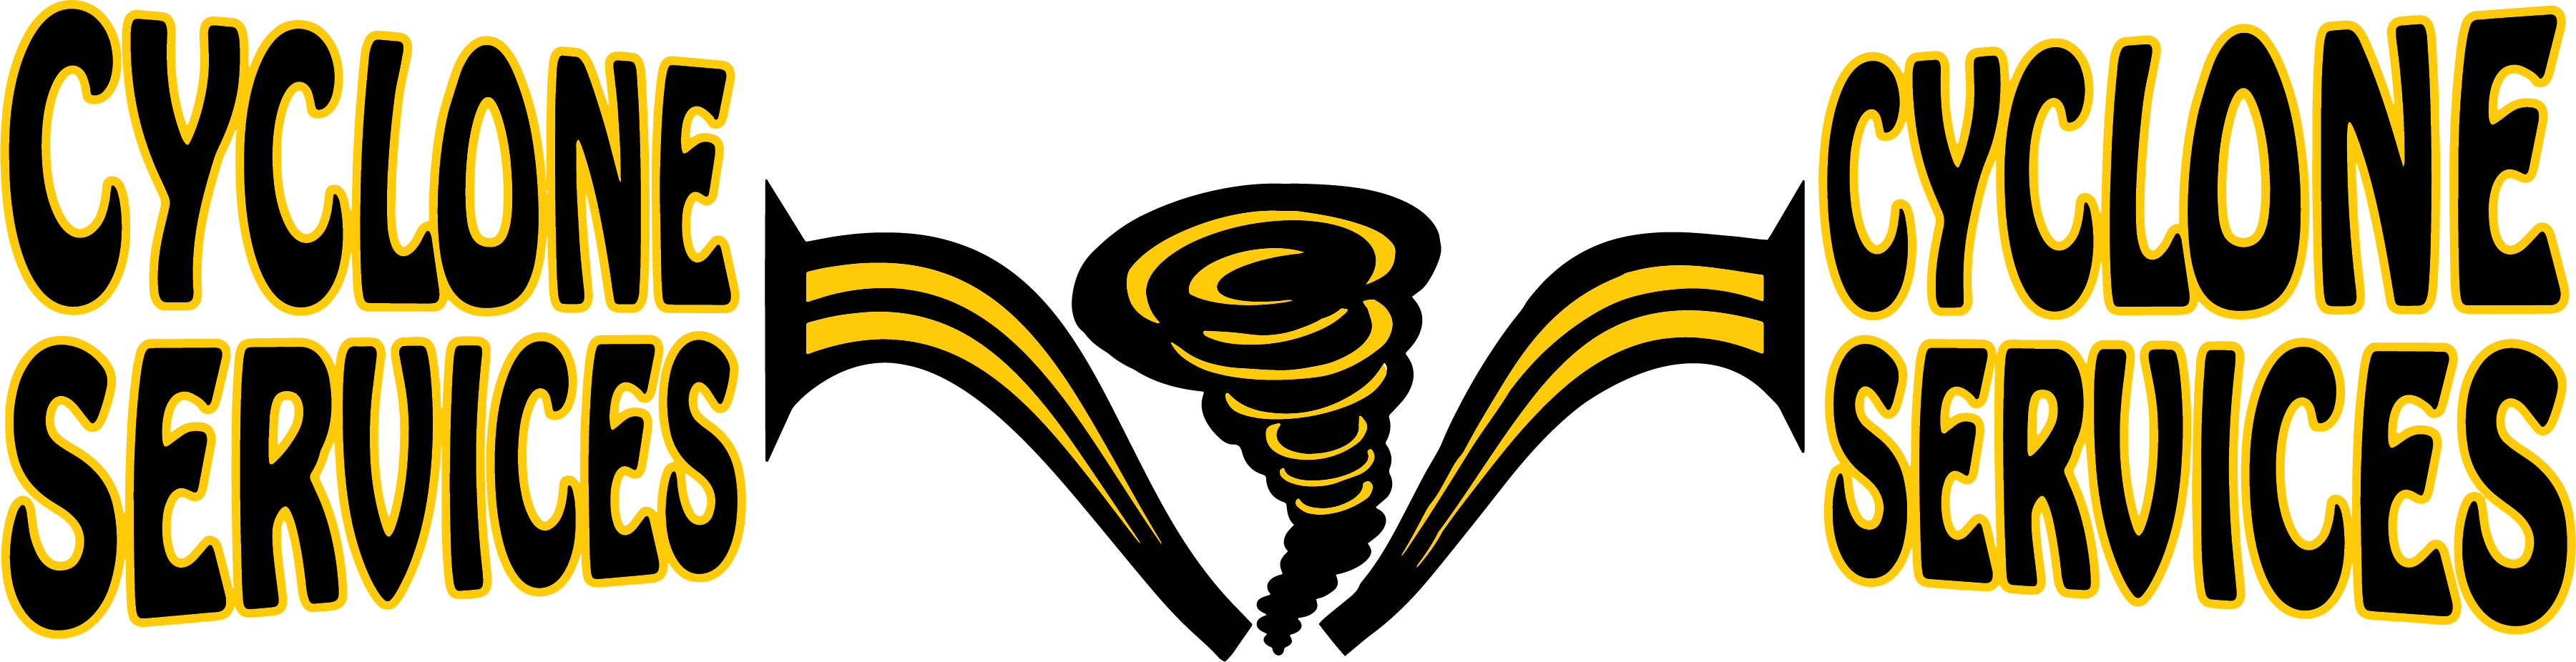 Main Logo-01 - Cyclone Services (3601x926)